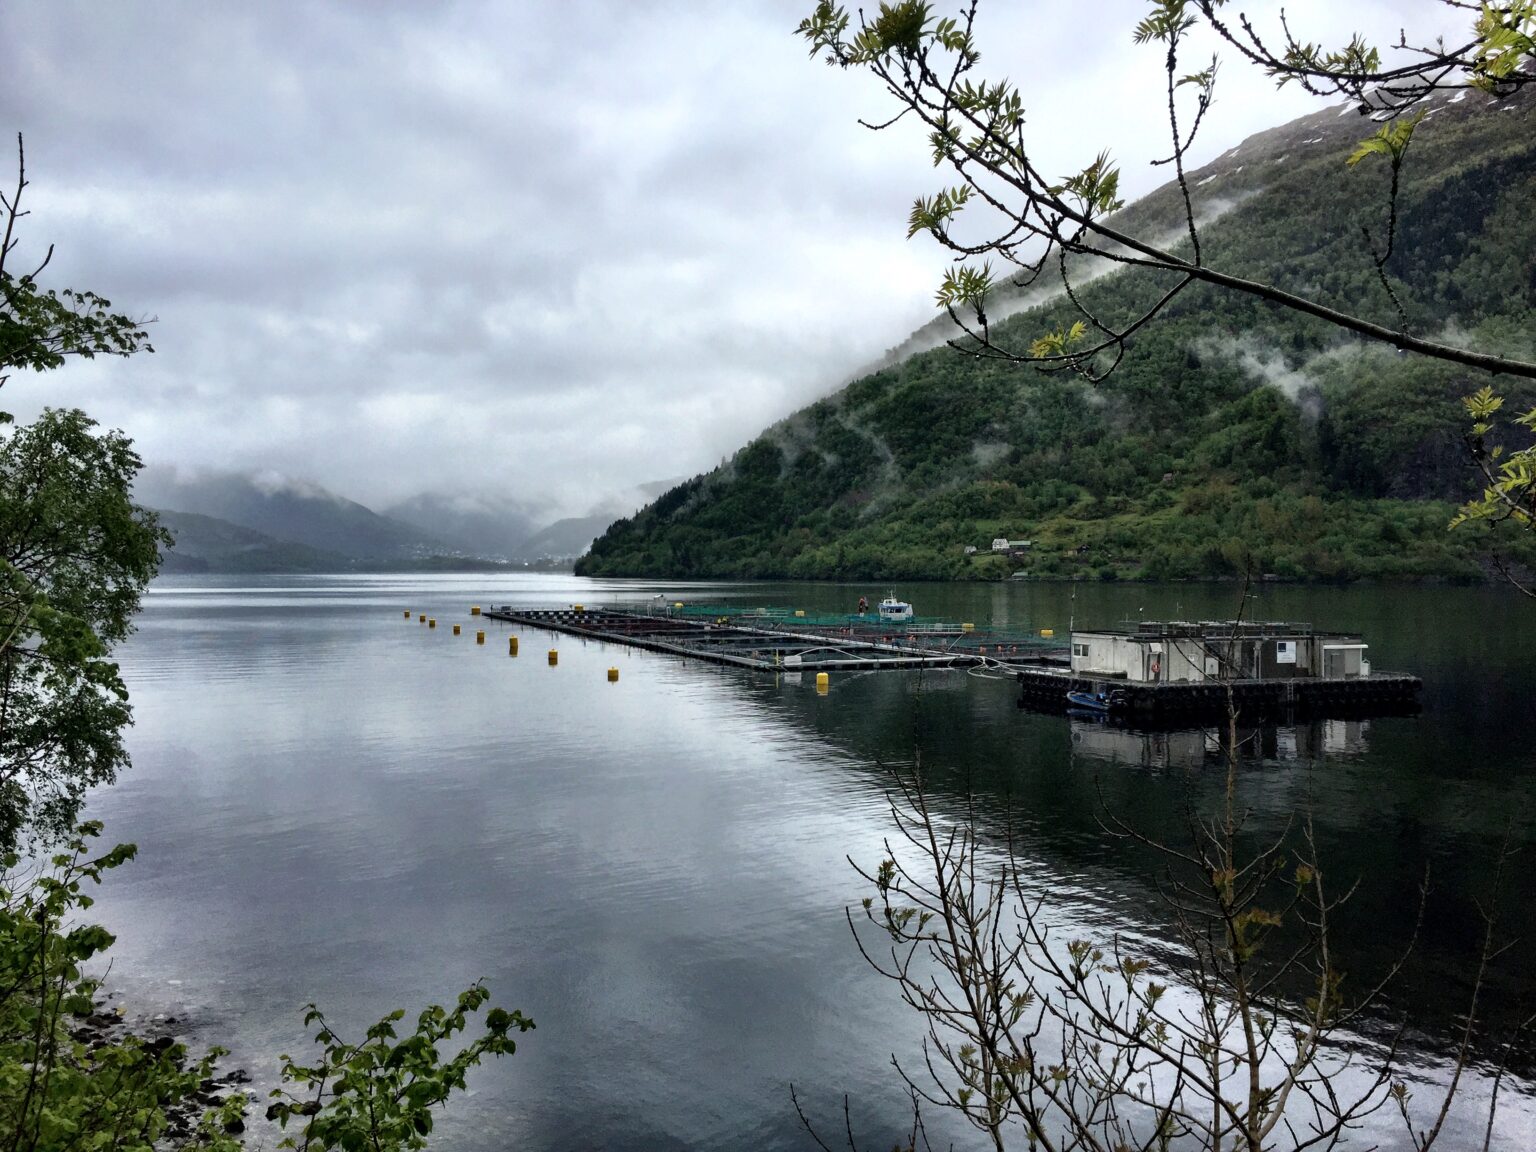 Fish farm in a fjord